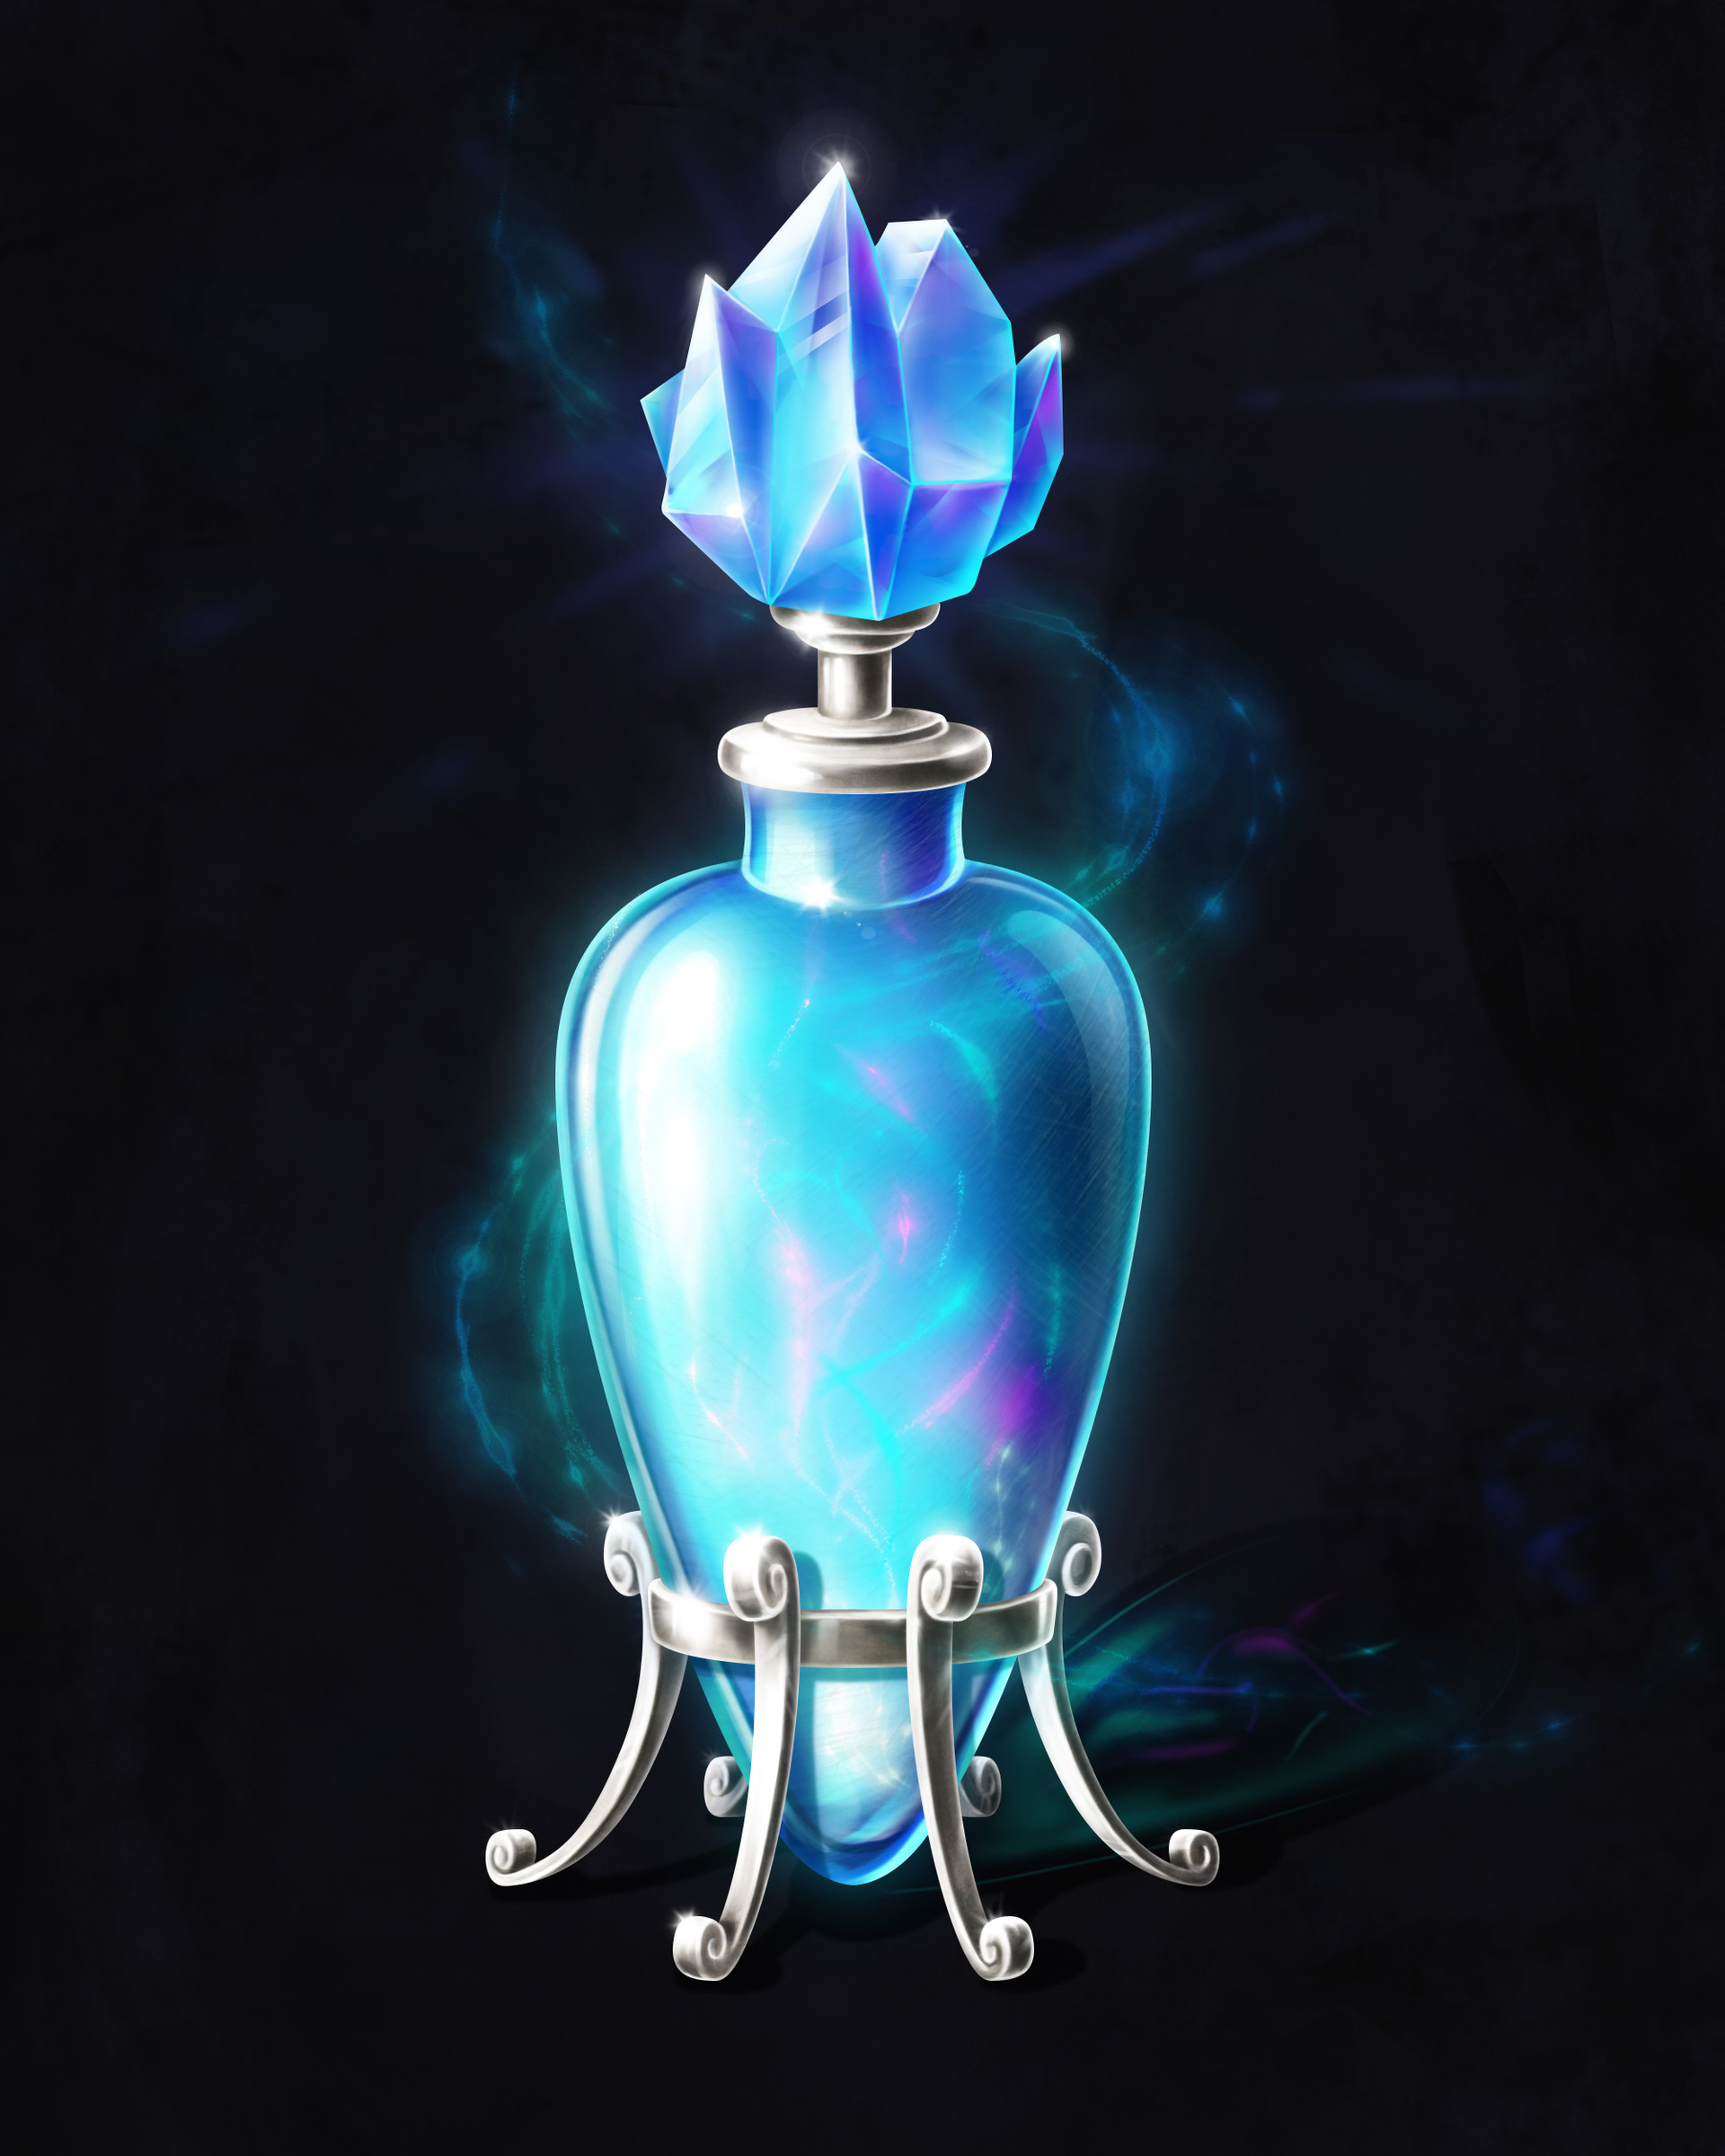 ArtStation - Magic potion bottles